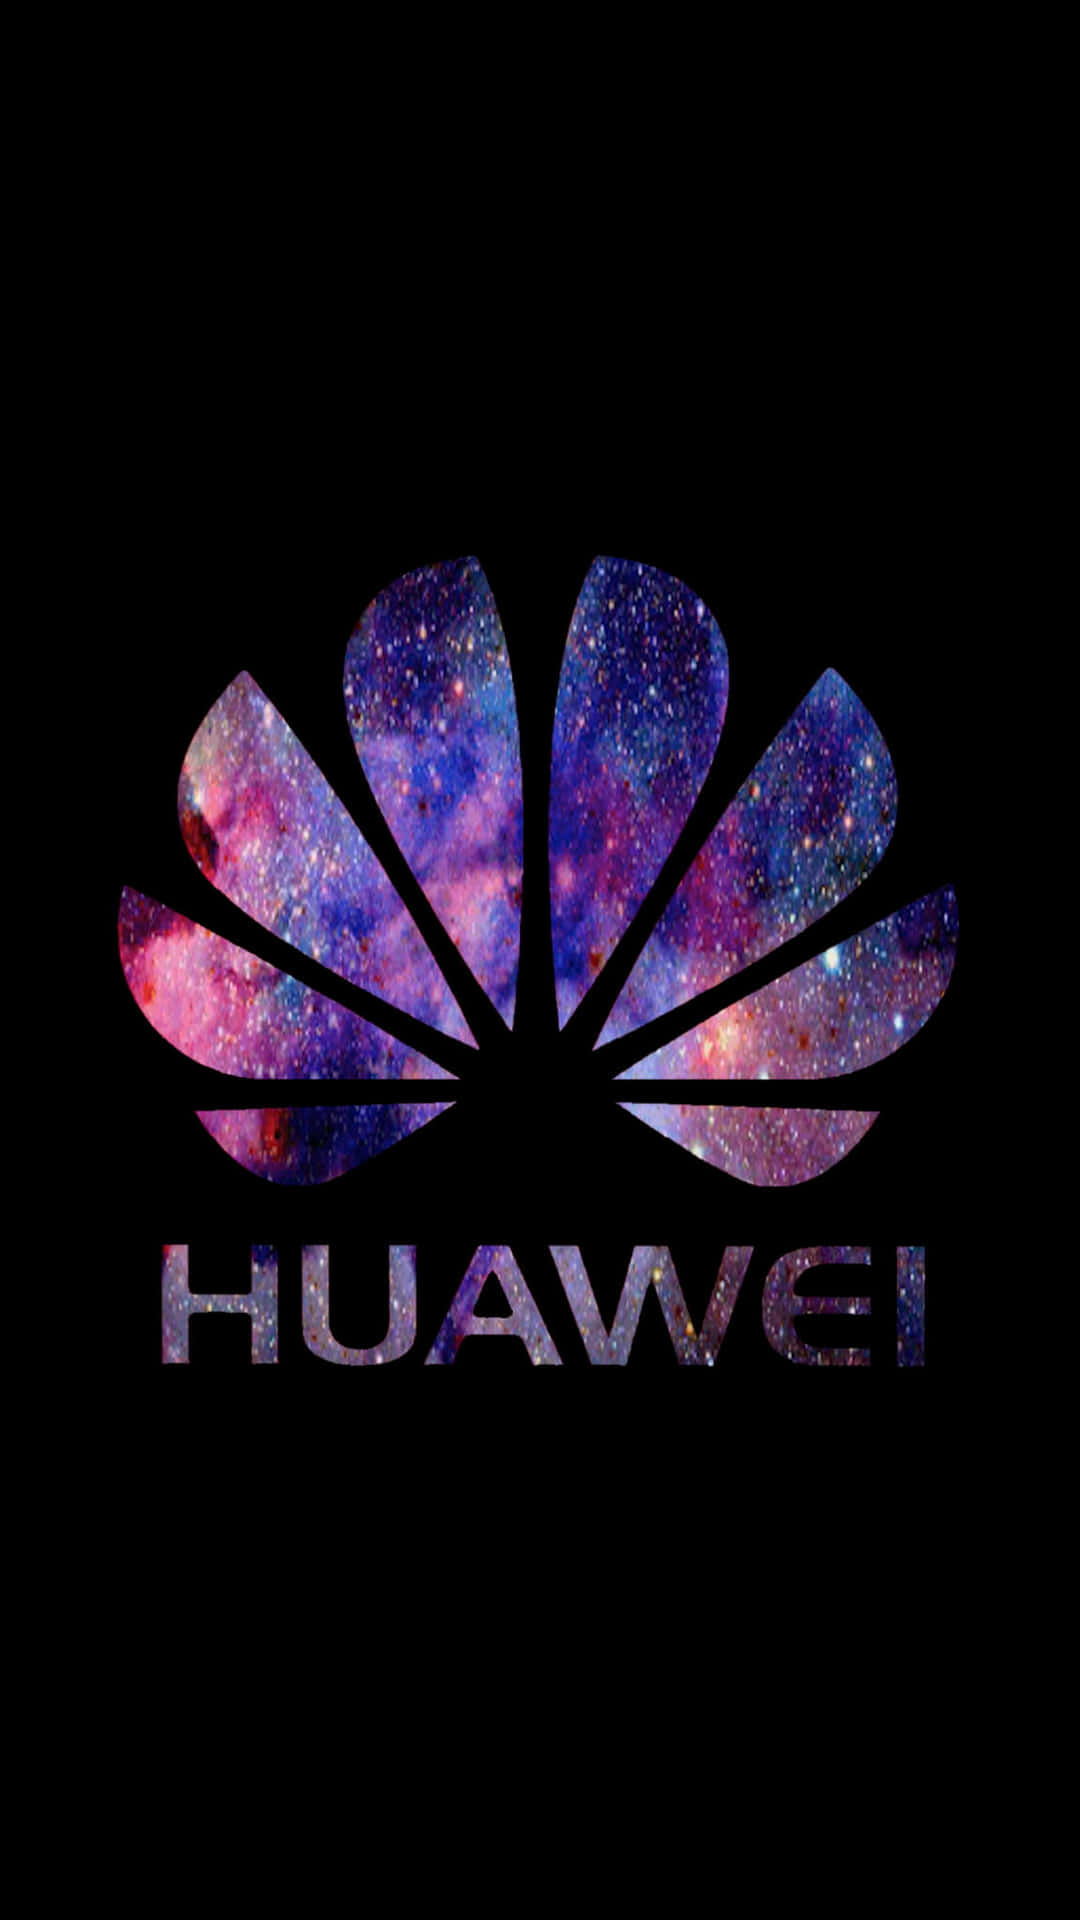 Detsenaste Inom Mobilteknologi - Huawei